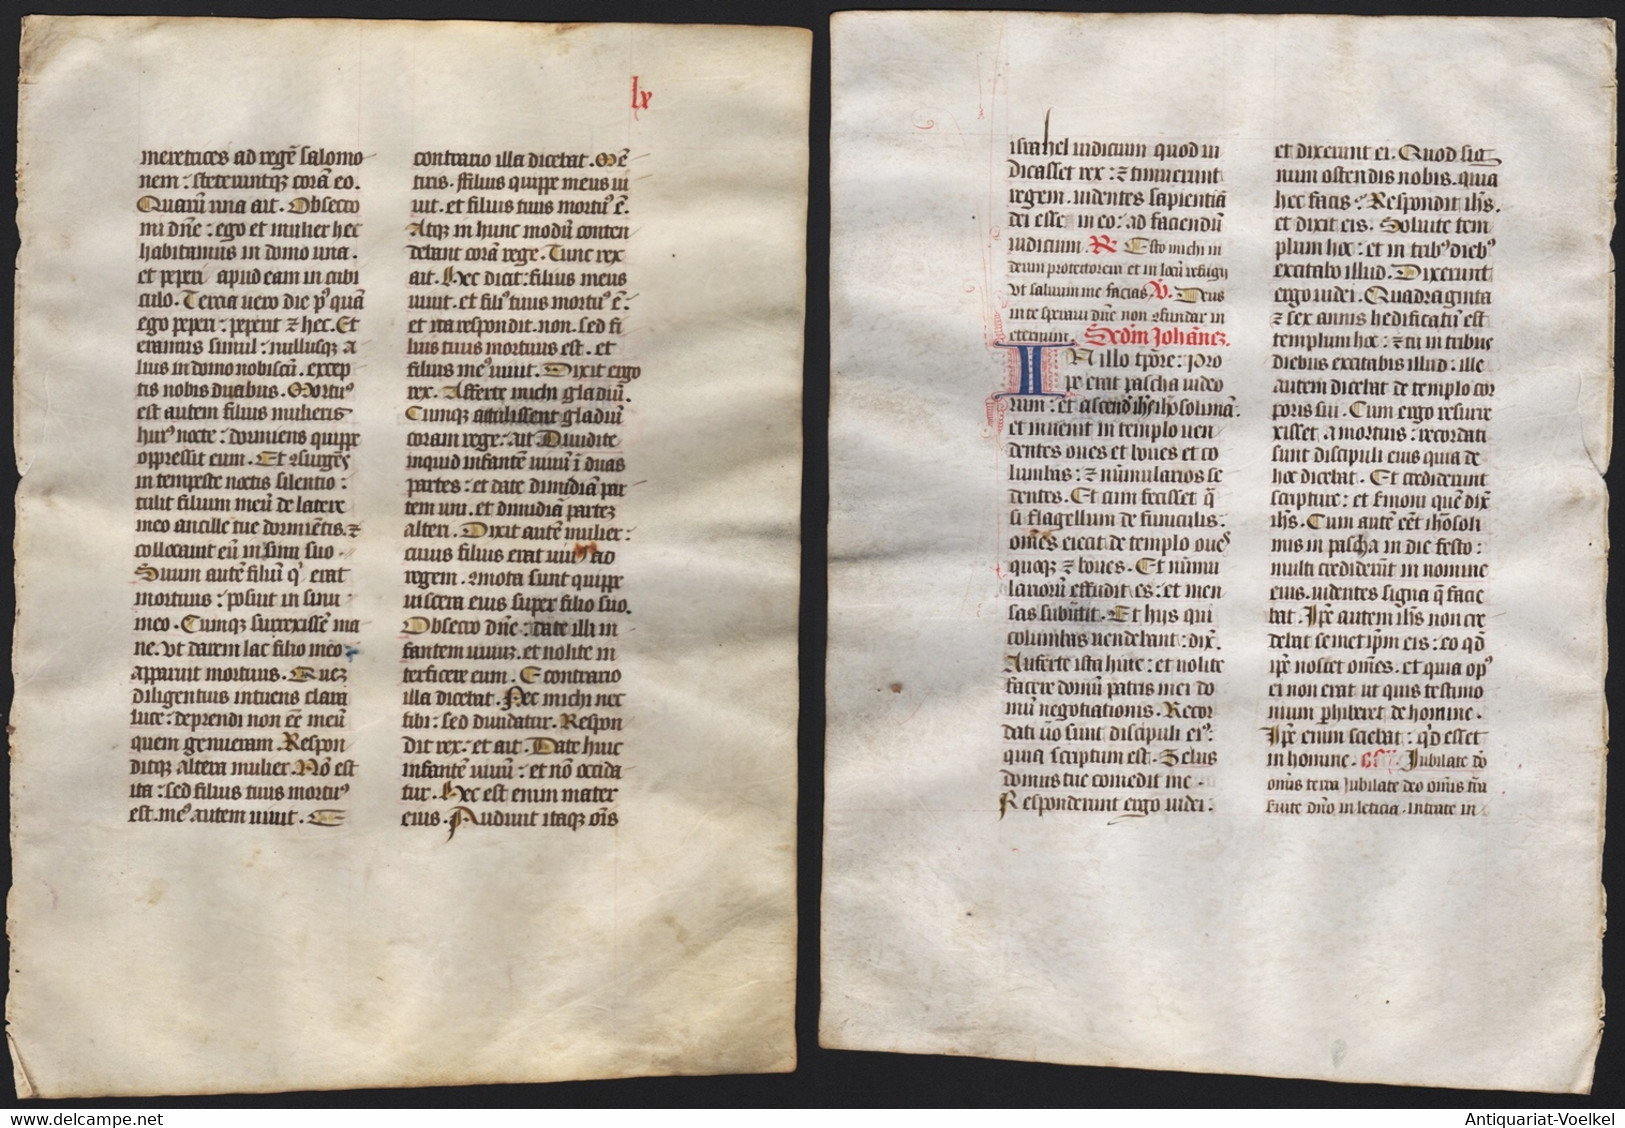 Missal Missale Manuscript Manuscrit Handschrift - (Blatt / Leaf LX) - Theatre & Scripts